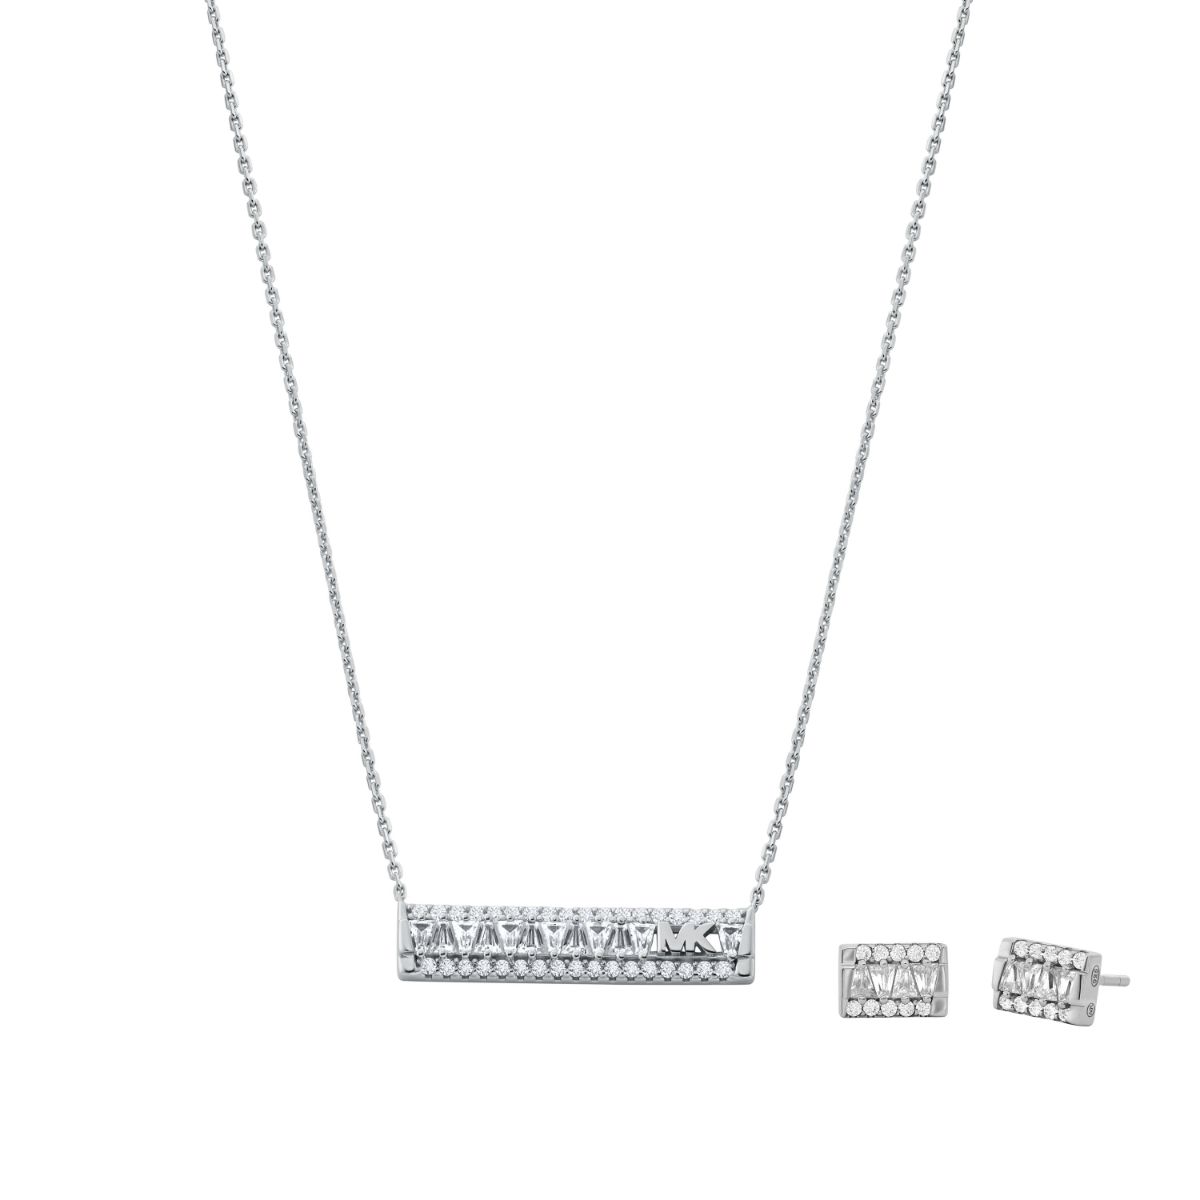 Michael Kors Padlock Toggle Necklace, Silver Color | Michael kors jewelry, Silver  necklaces, Jewelry